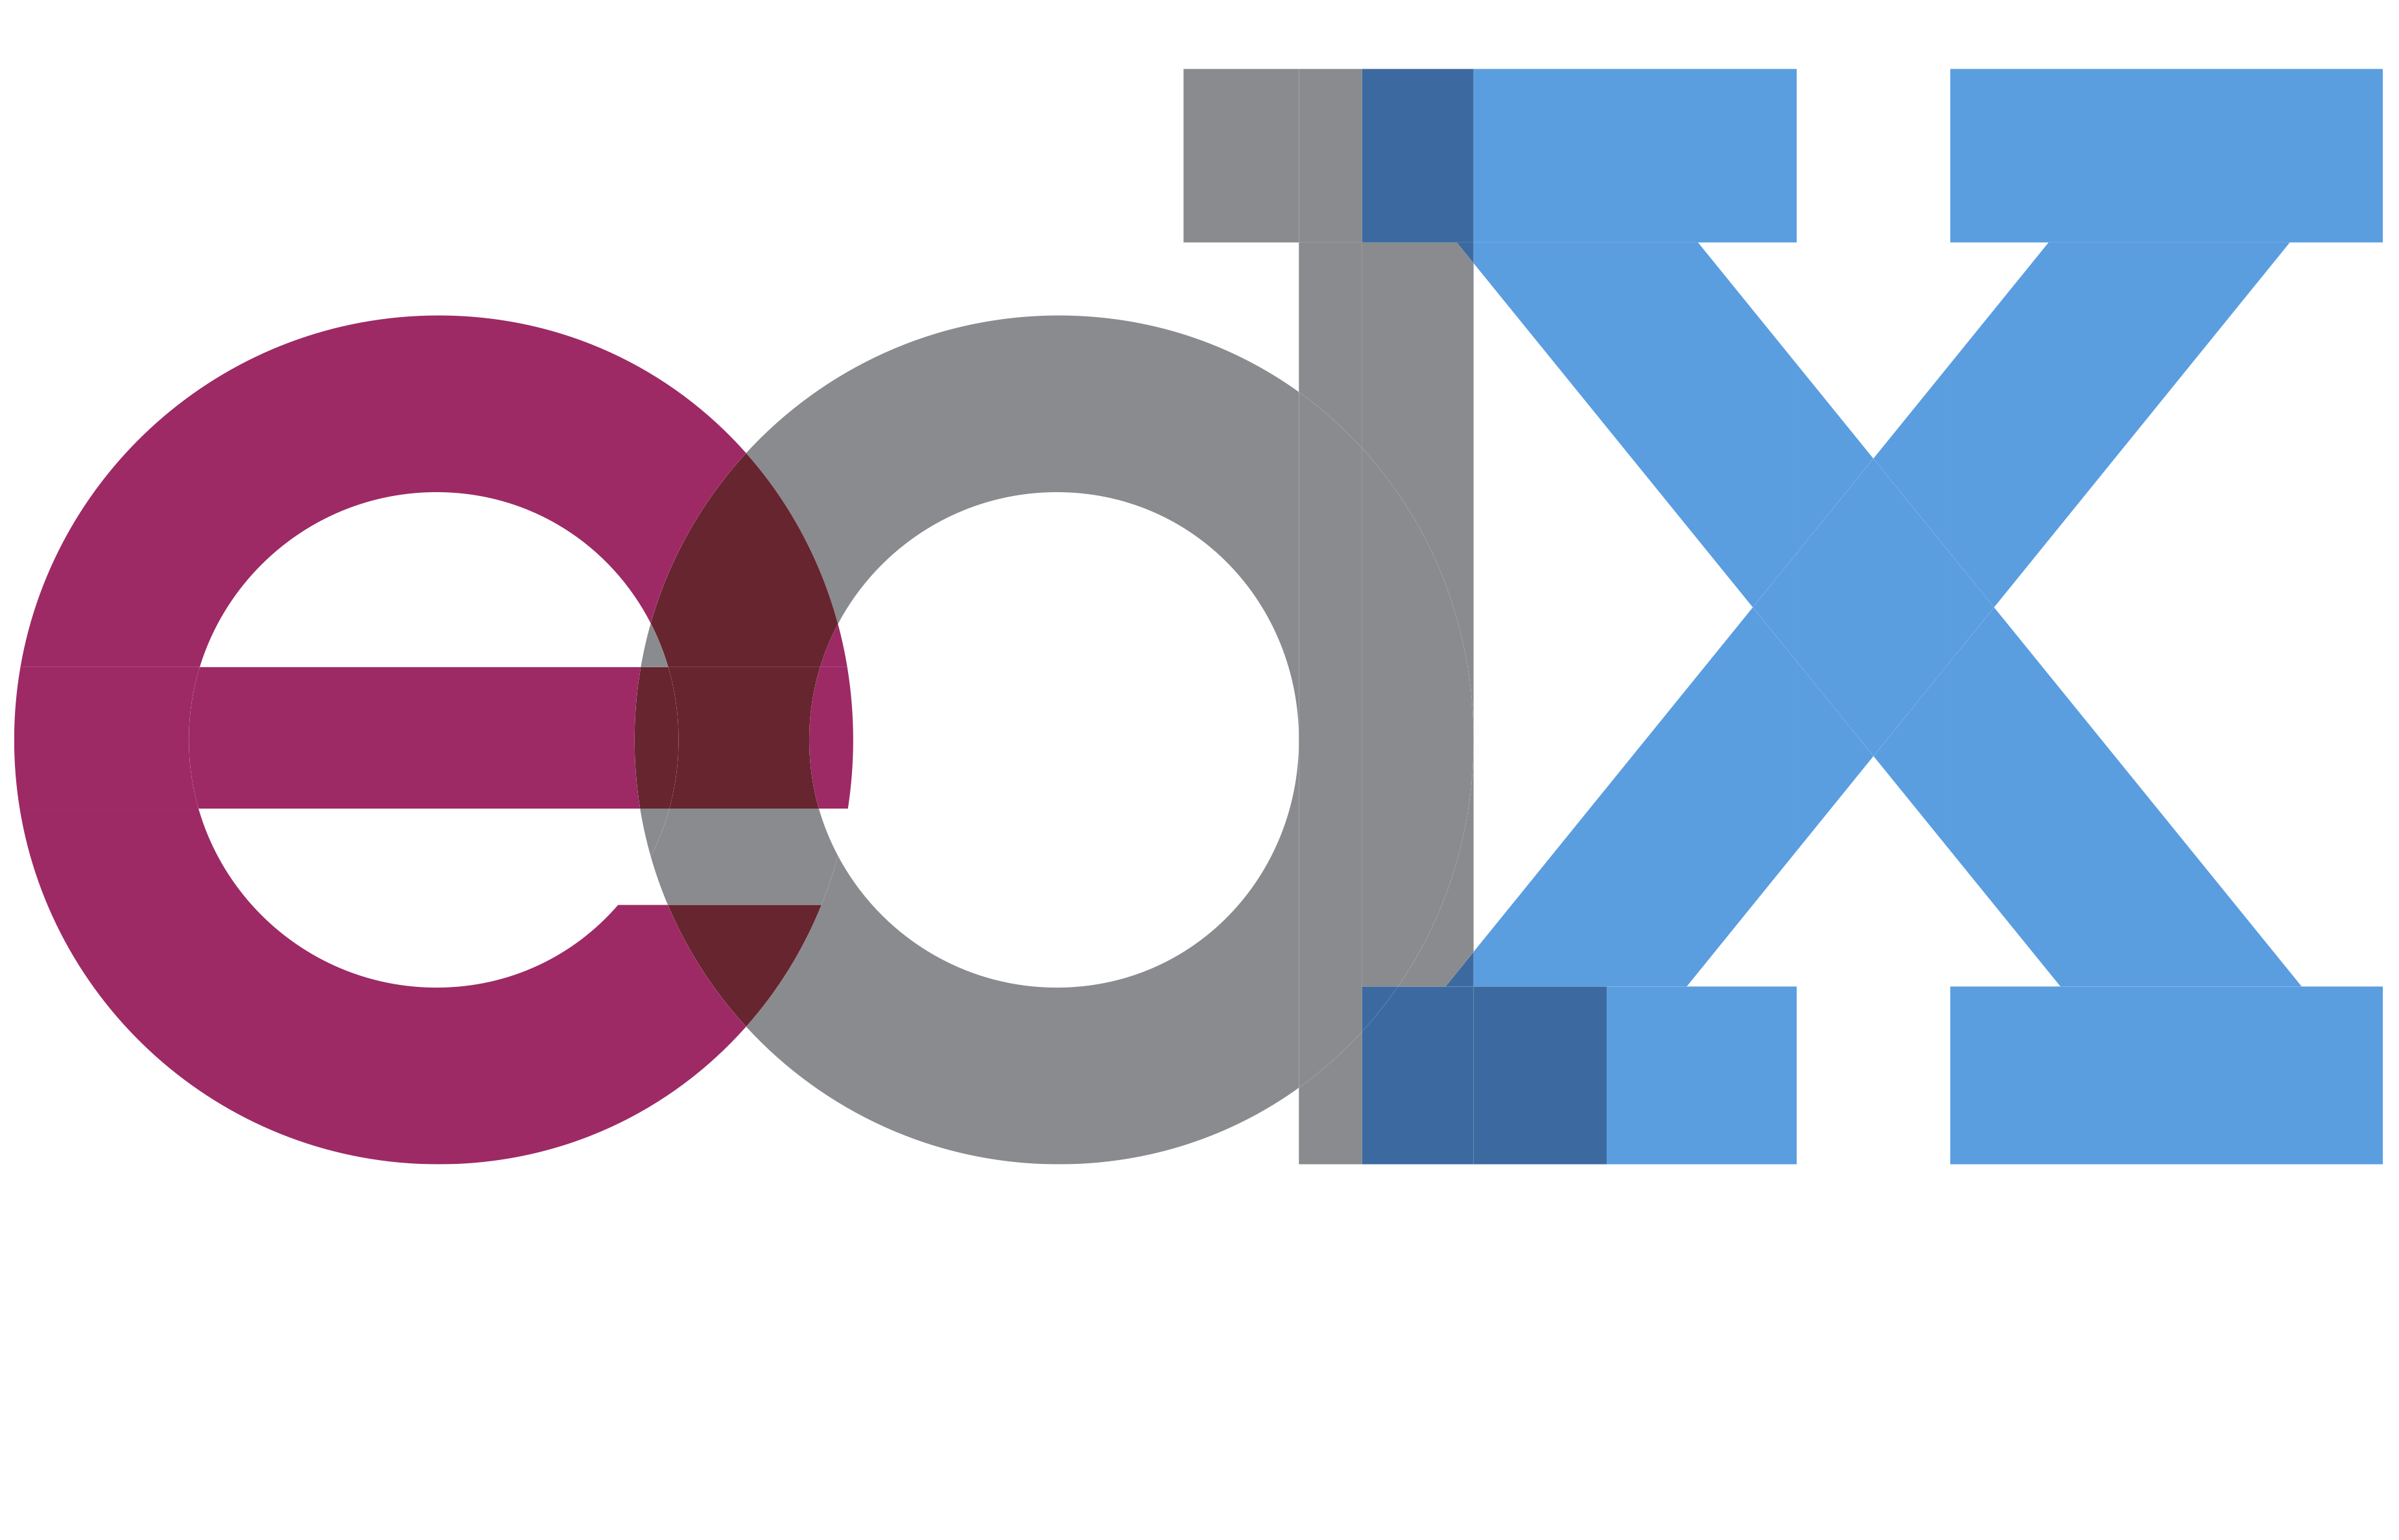 edx_logo.png